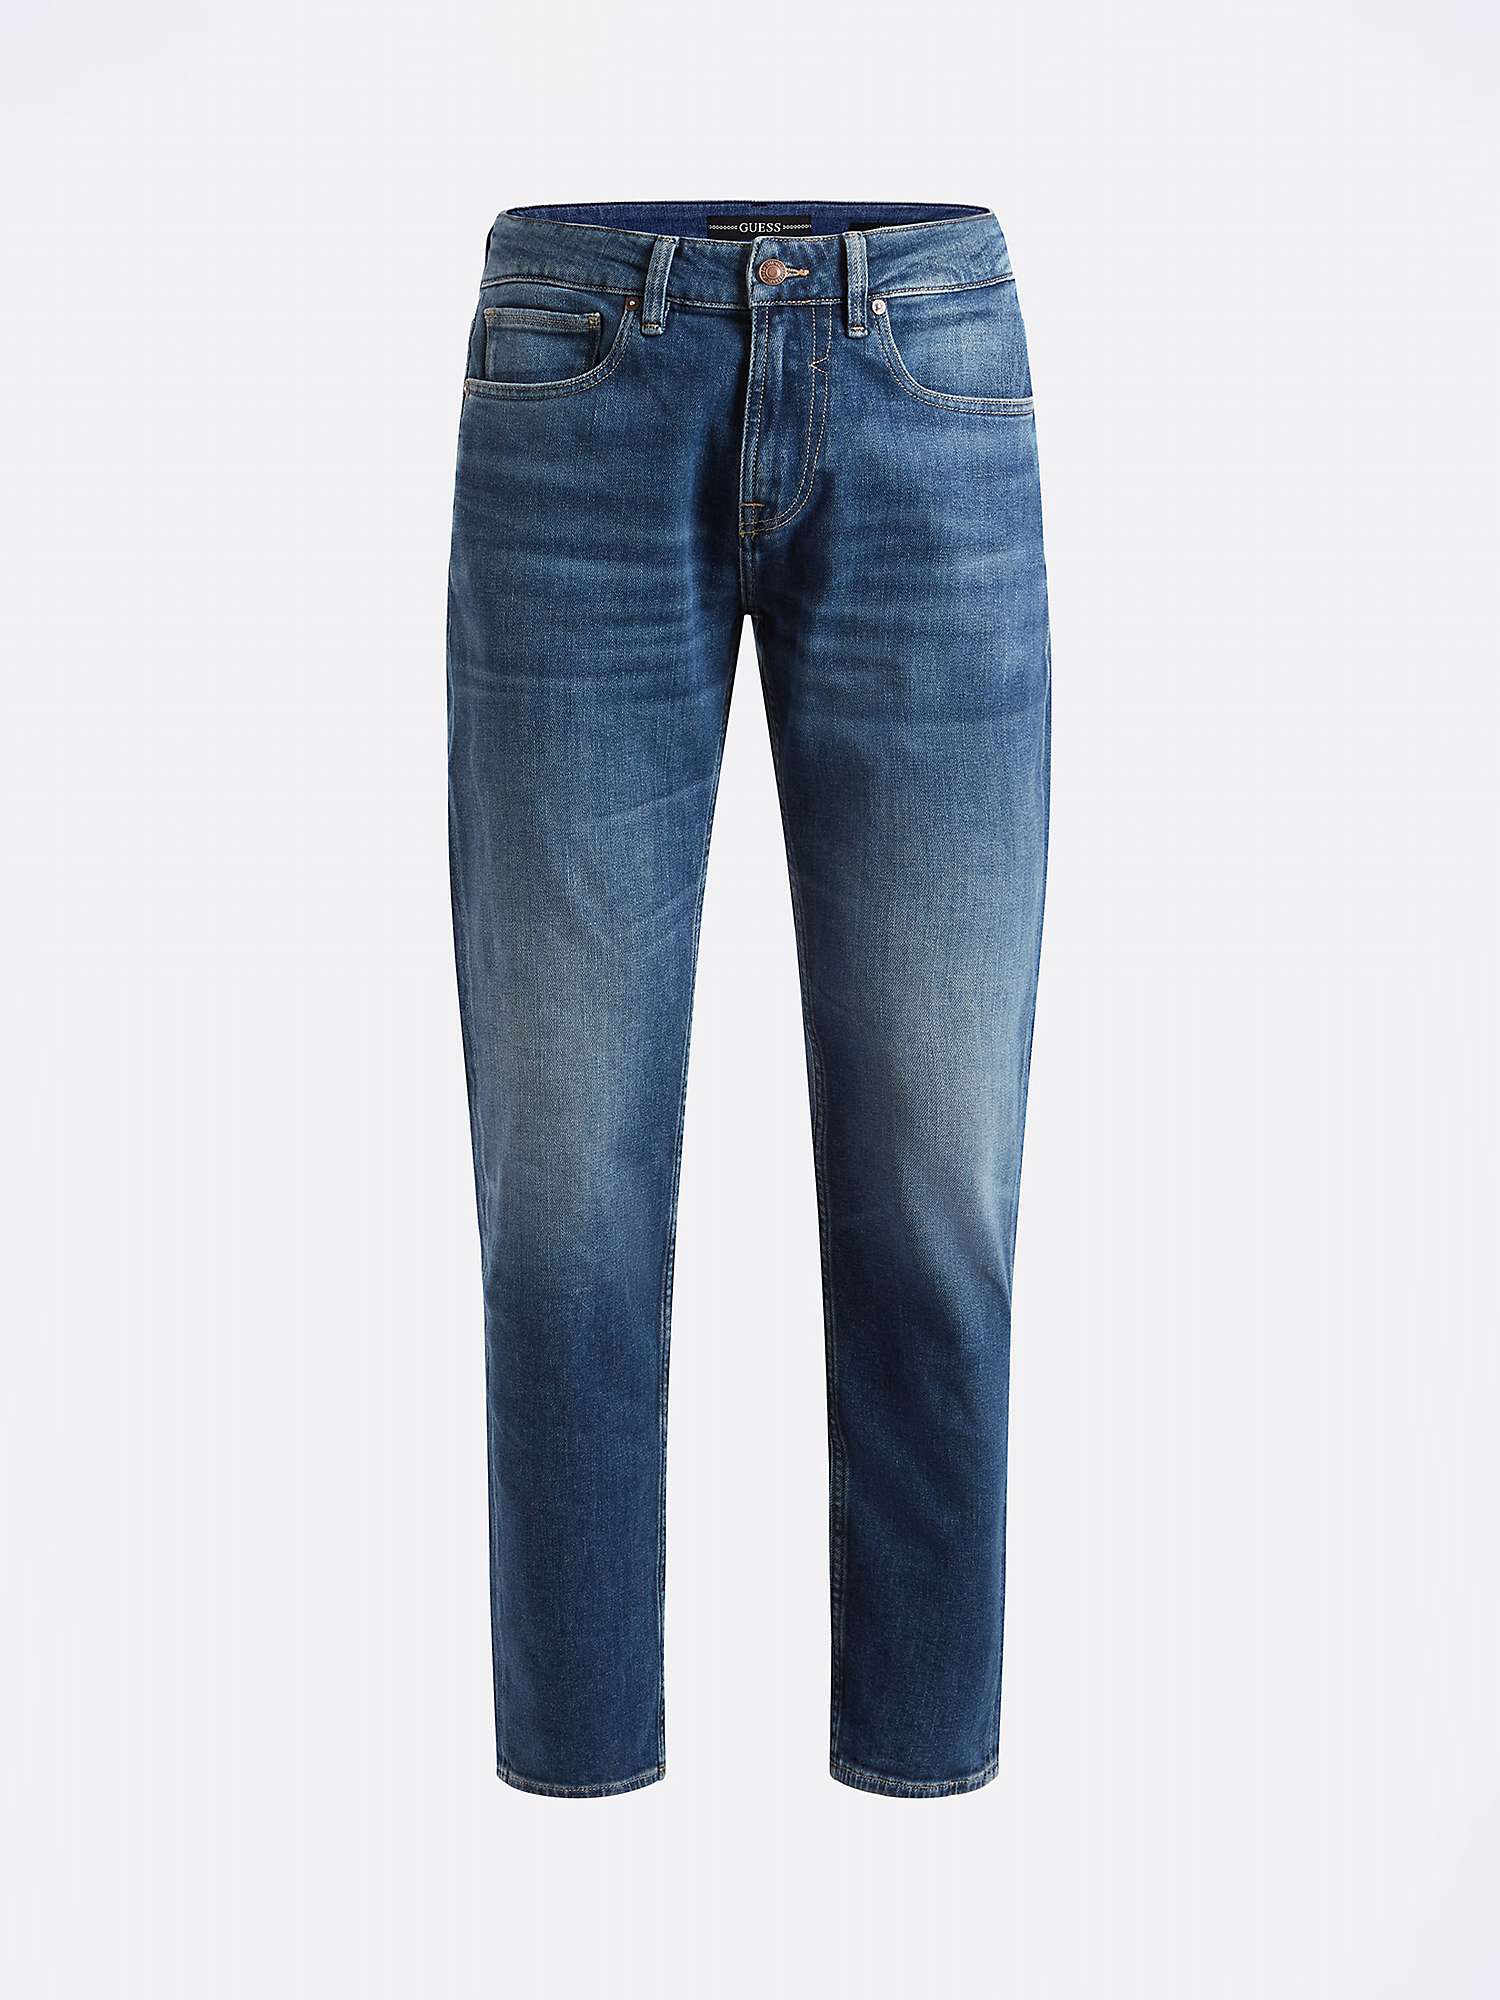 Buy GUESS Angels Slim Fit Denim Jeans, Carry Mid. Online at johnlewis.com